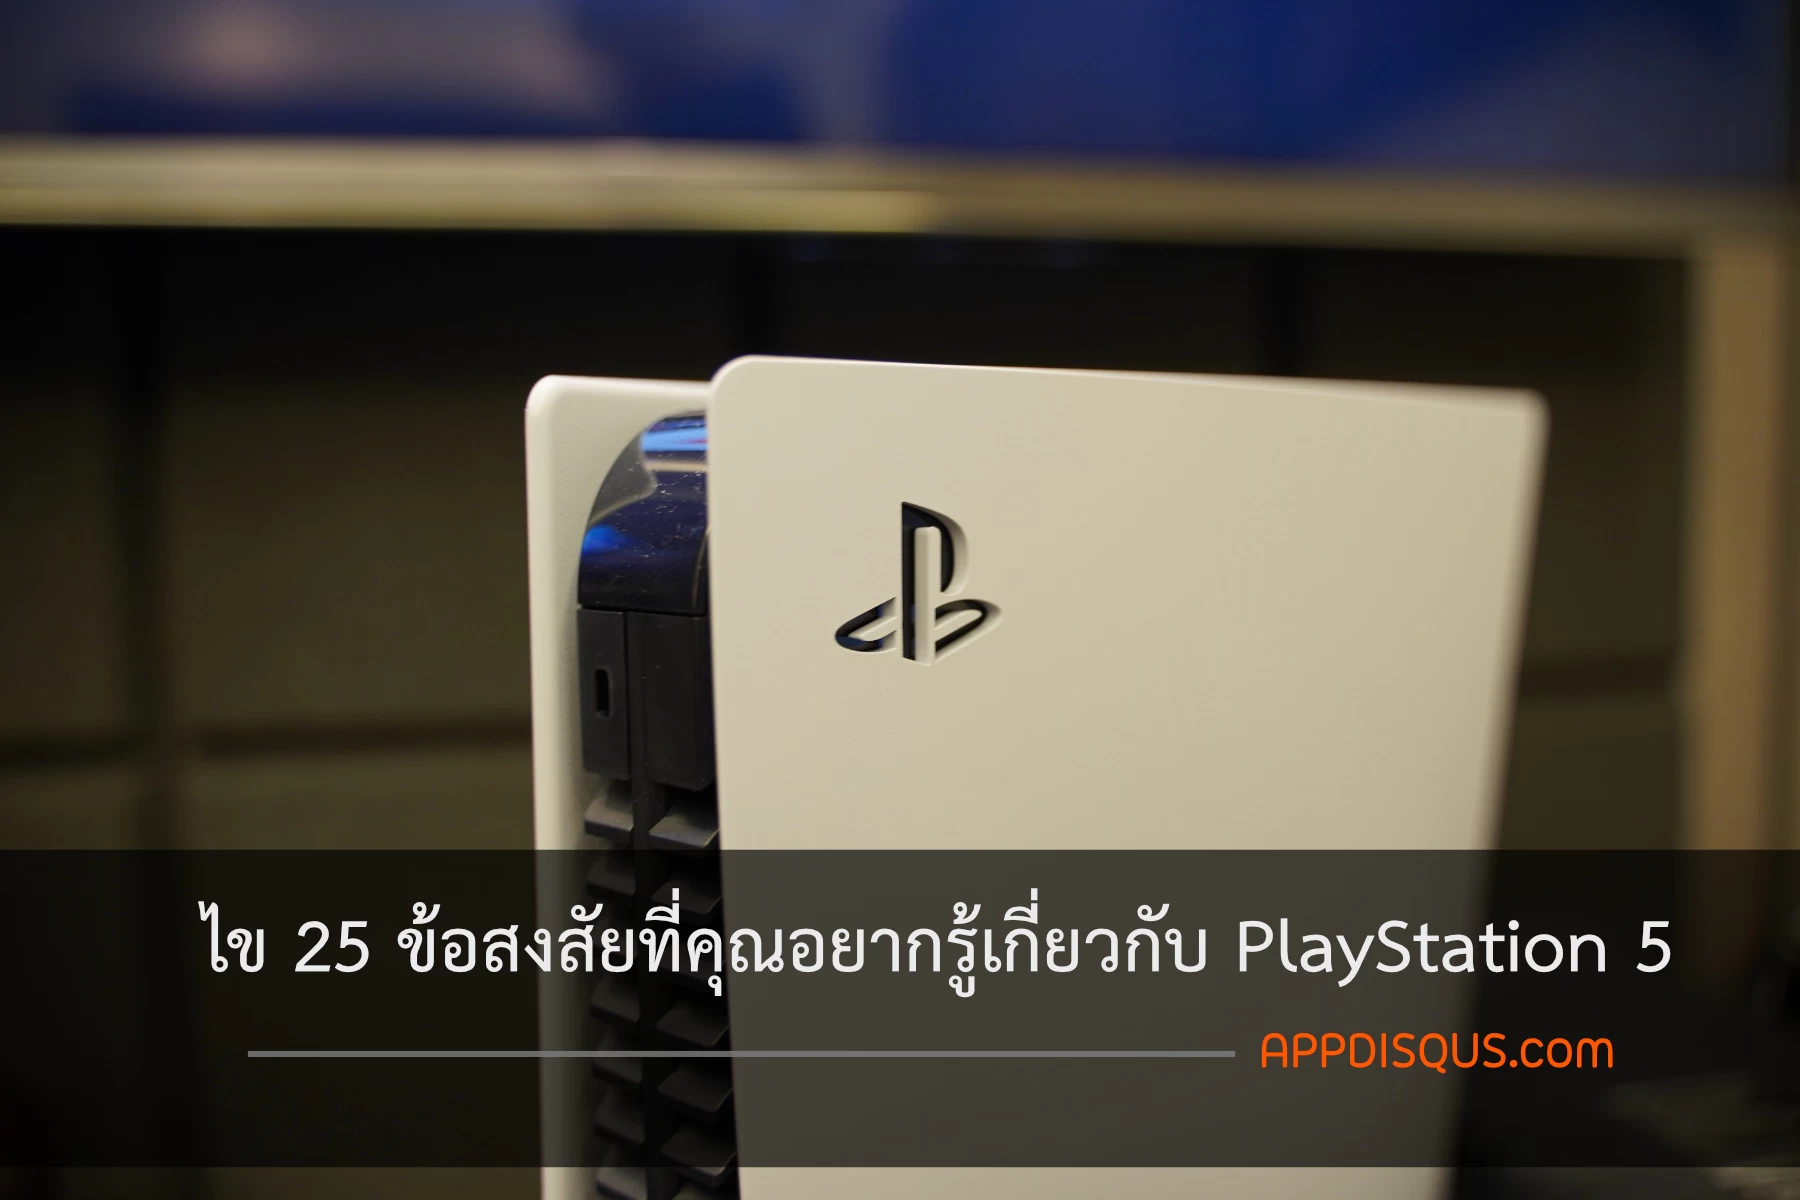 PlayStation 5 Q&A Cover AppDisqus